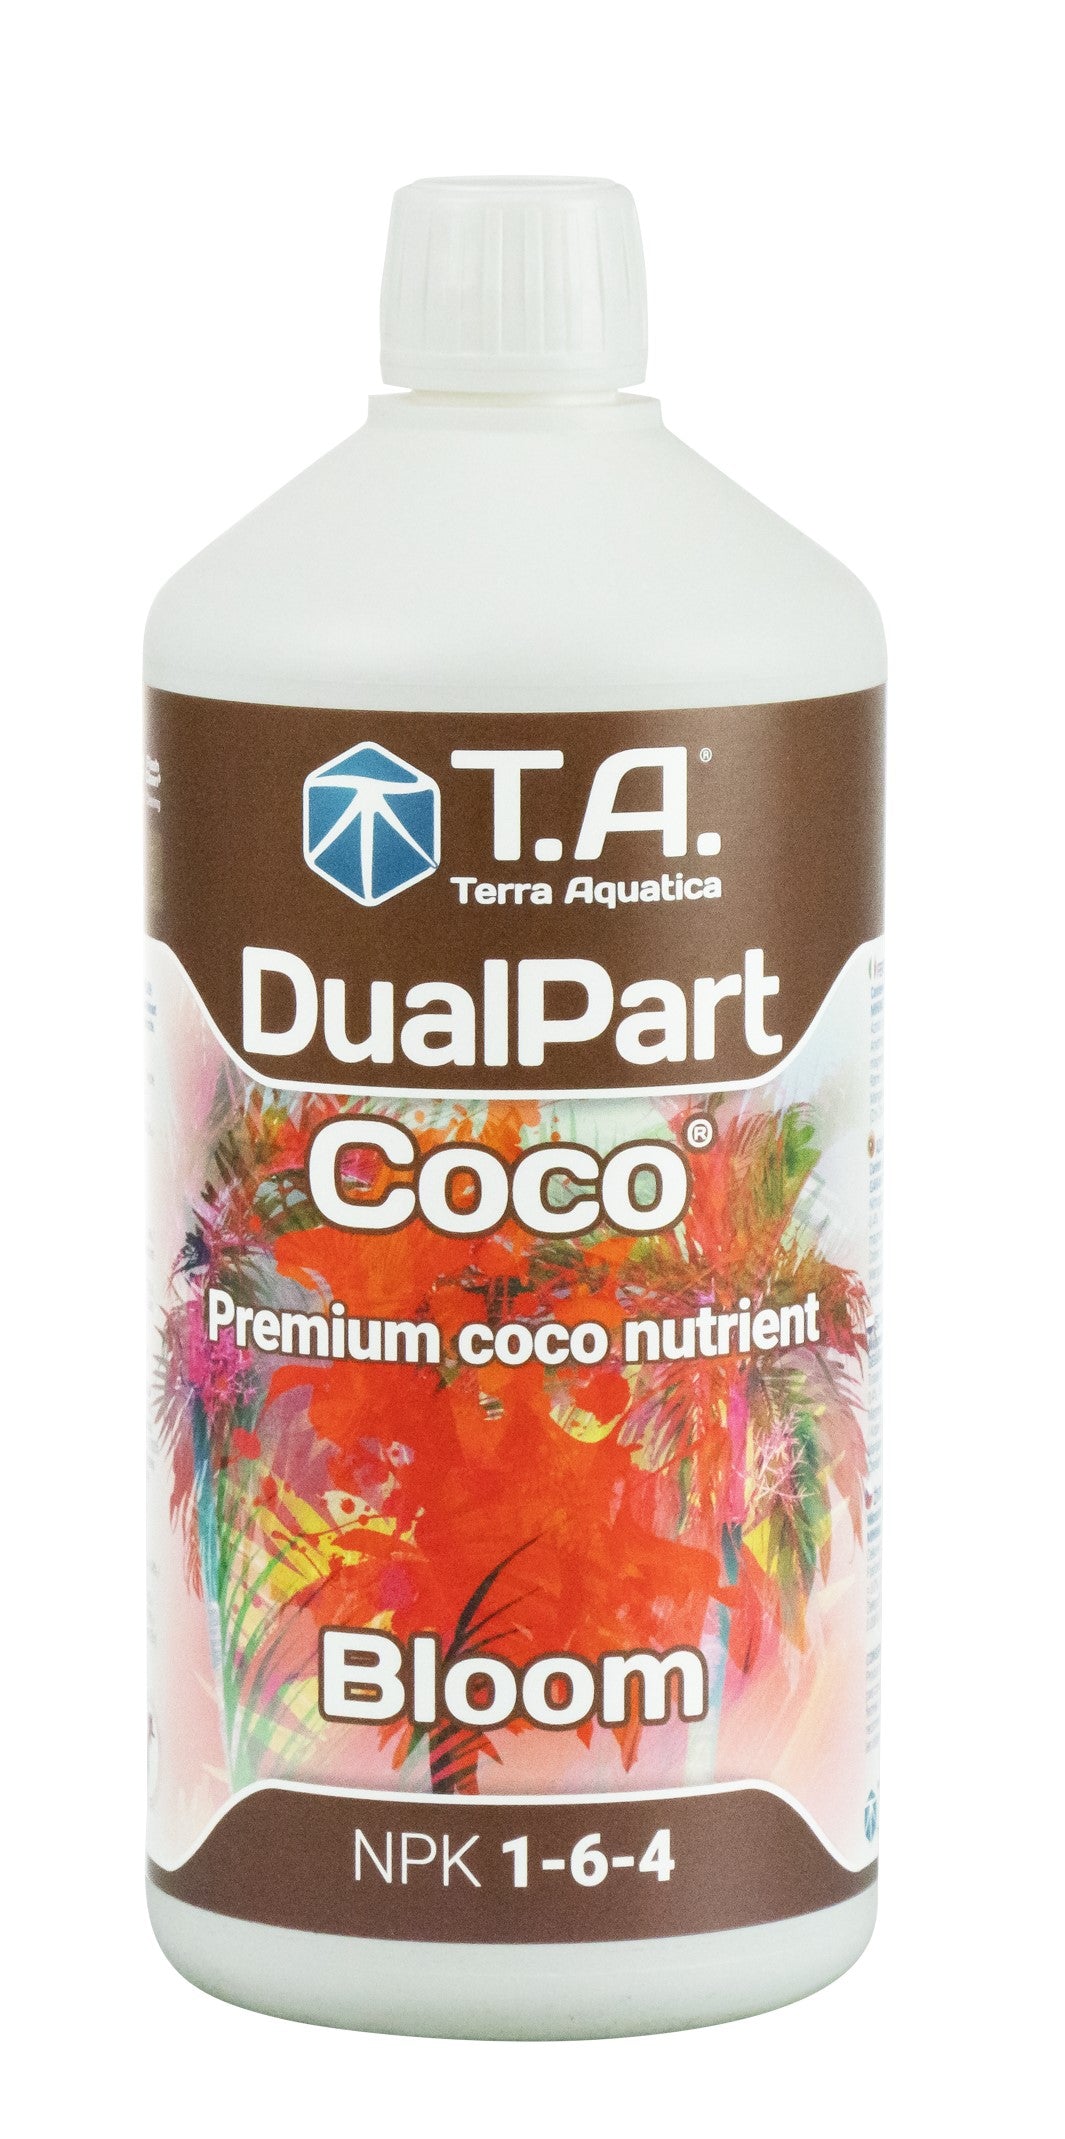 DualPart Coco - მინერალური სასუქი